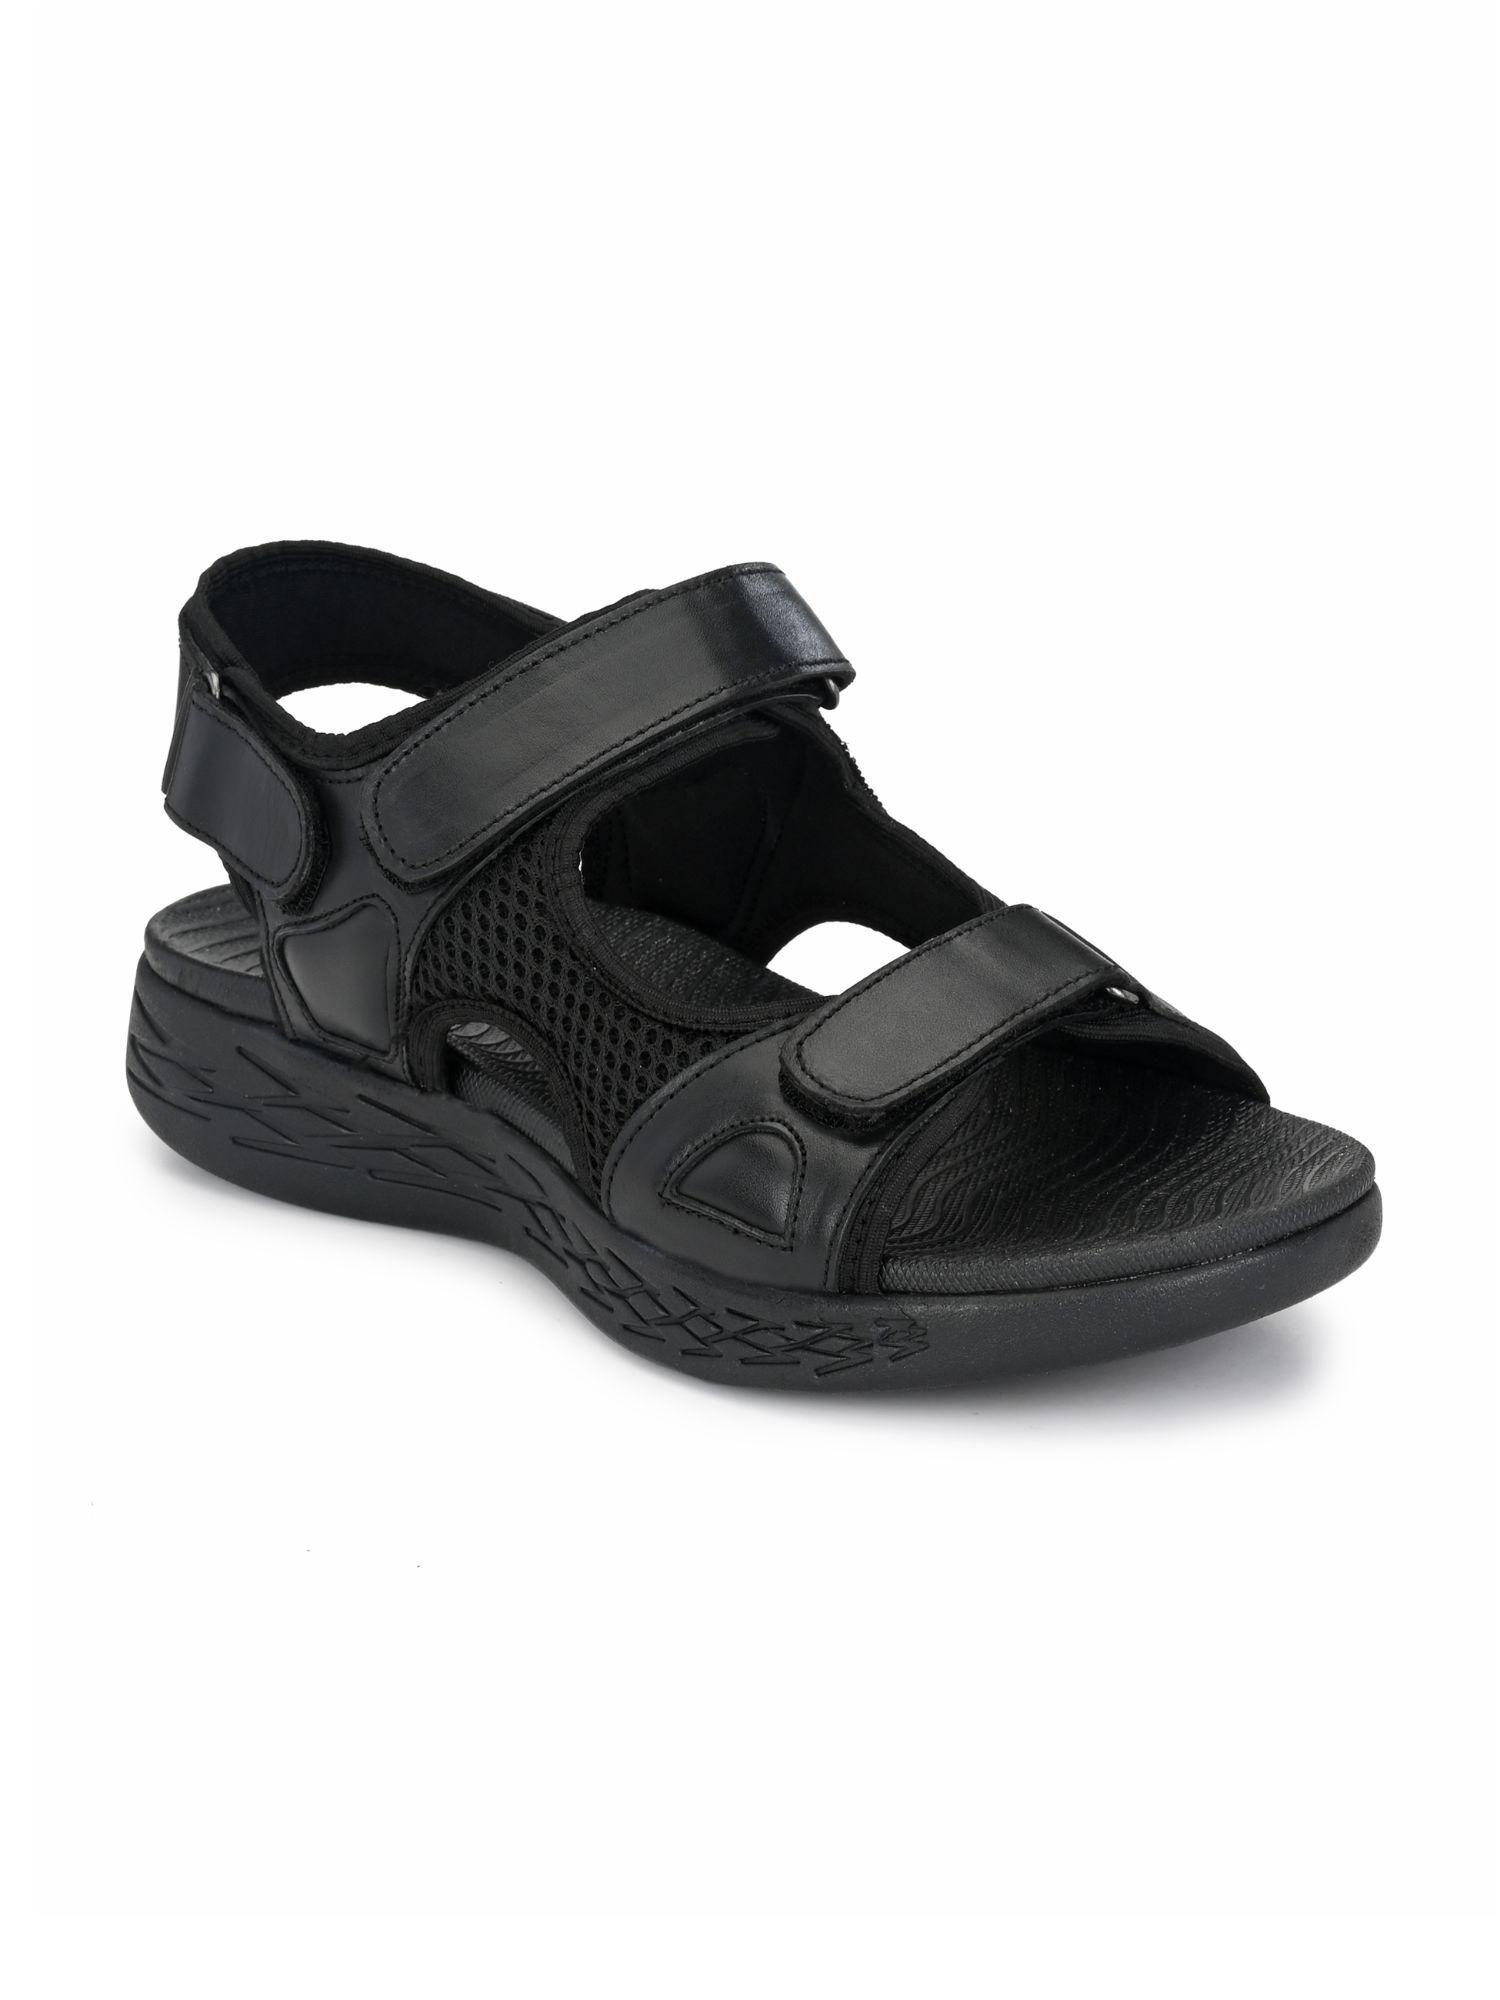 mens black solid sports sandals